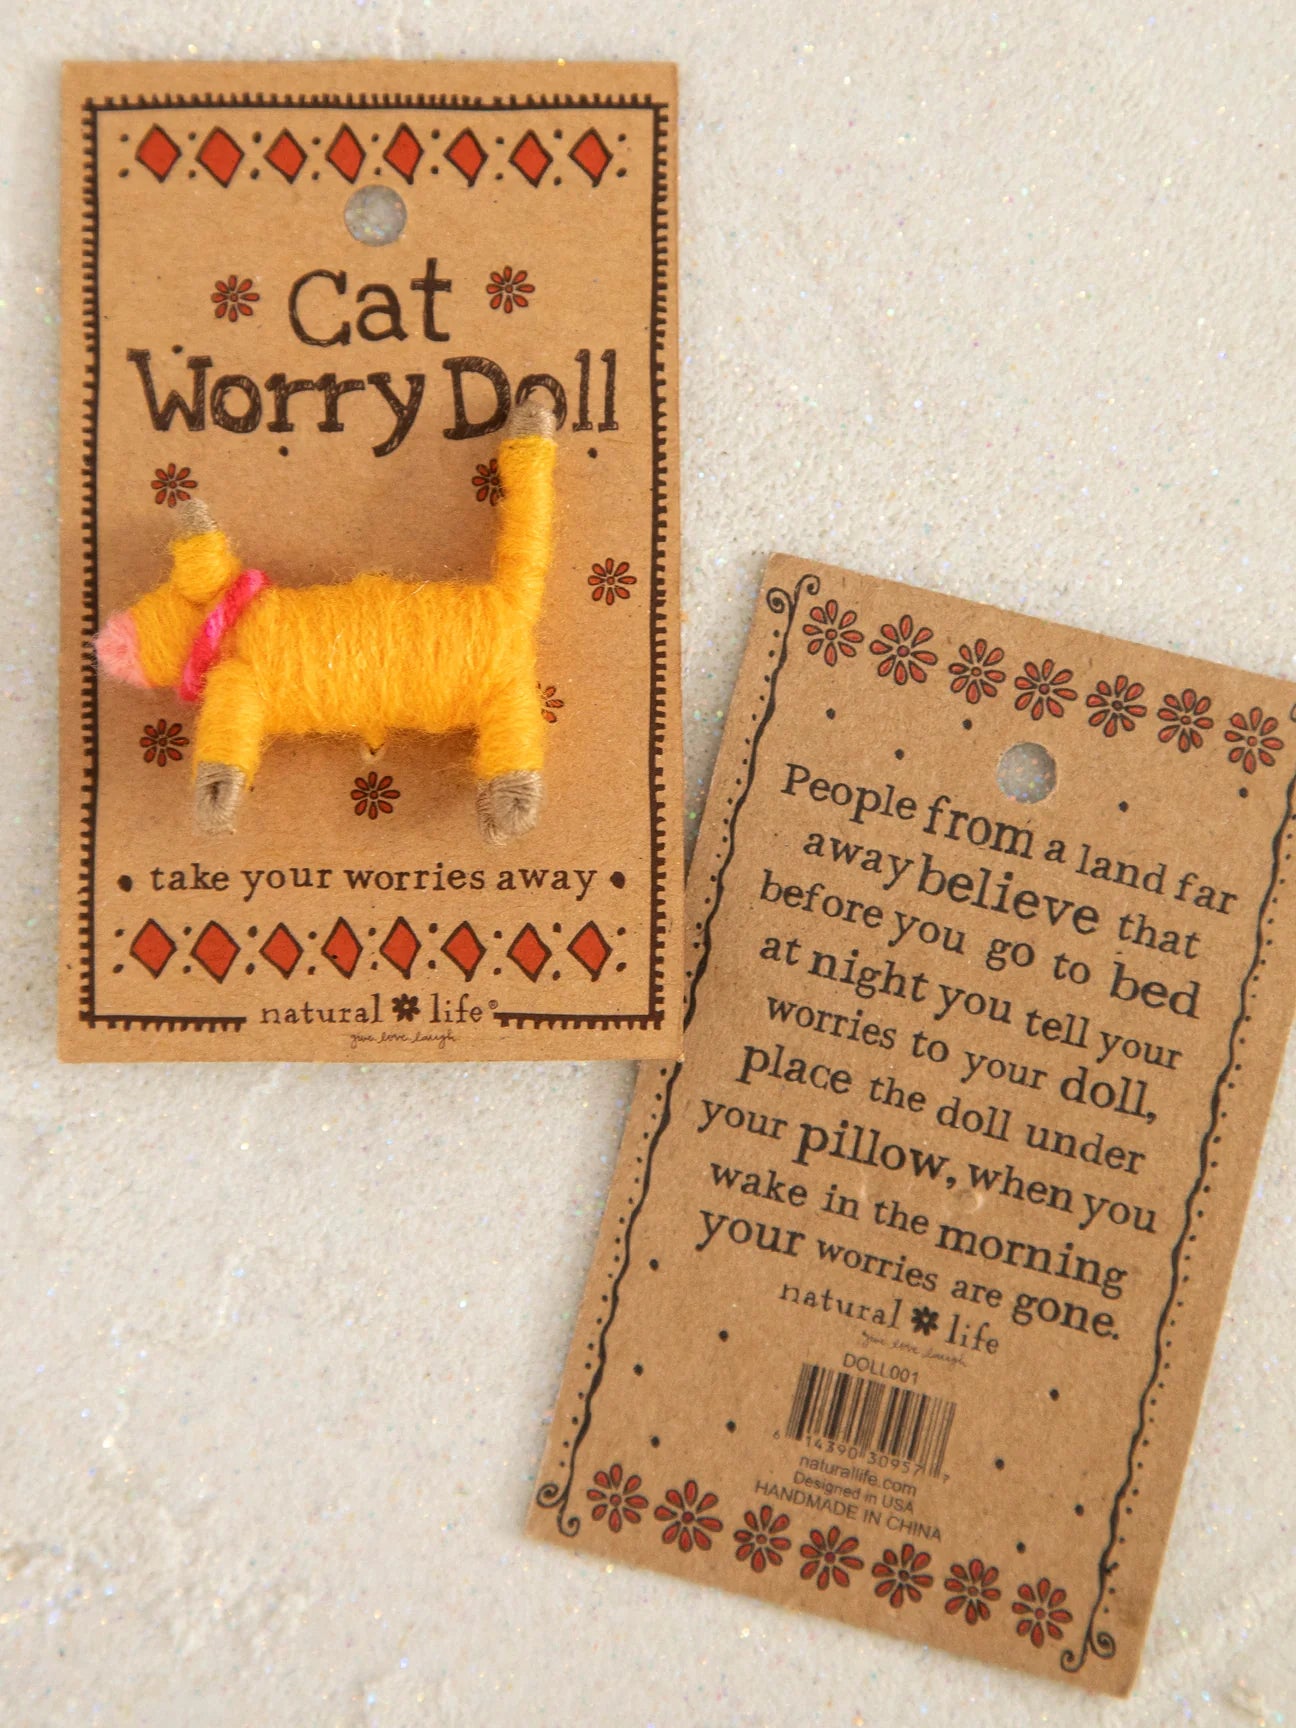 Worry Doll - Cat